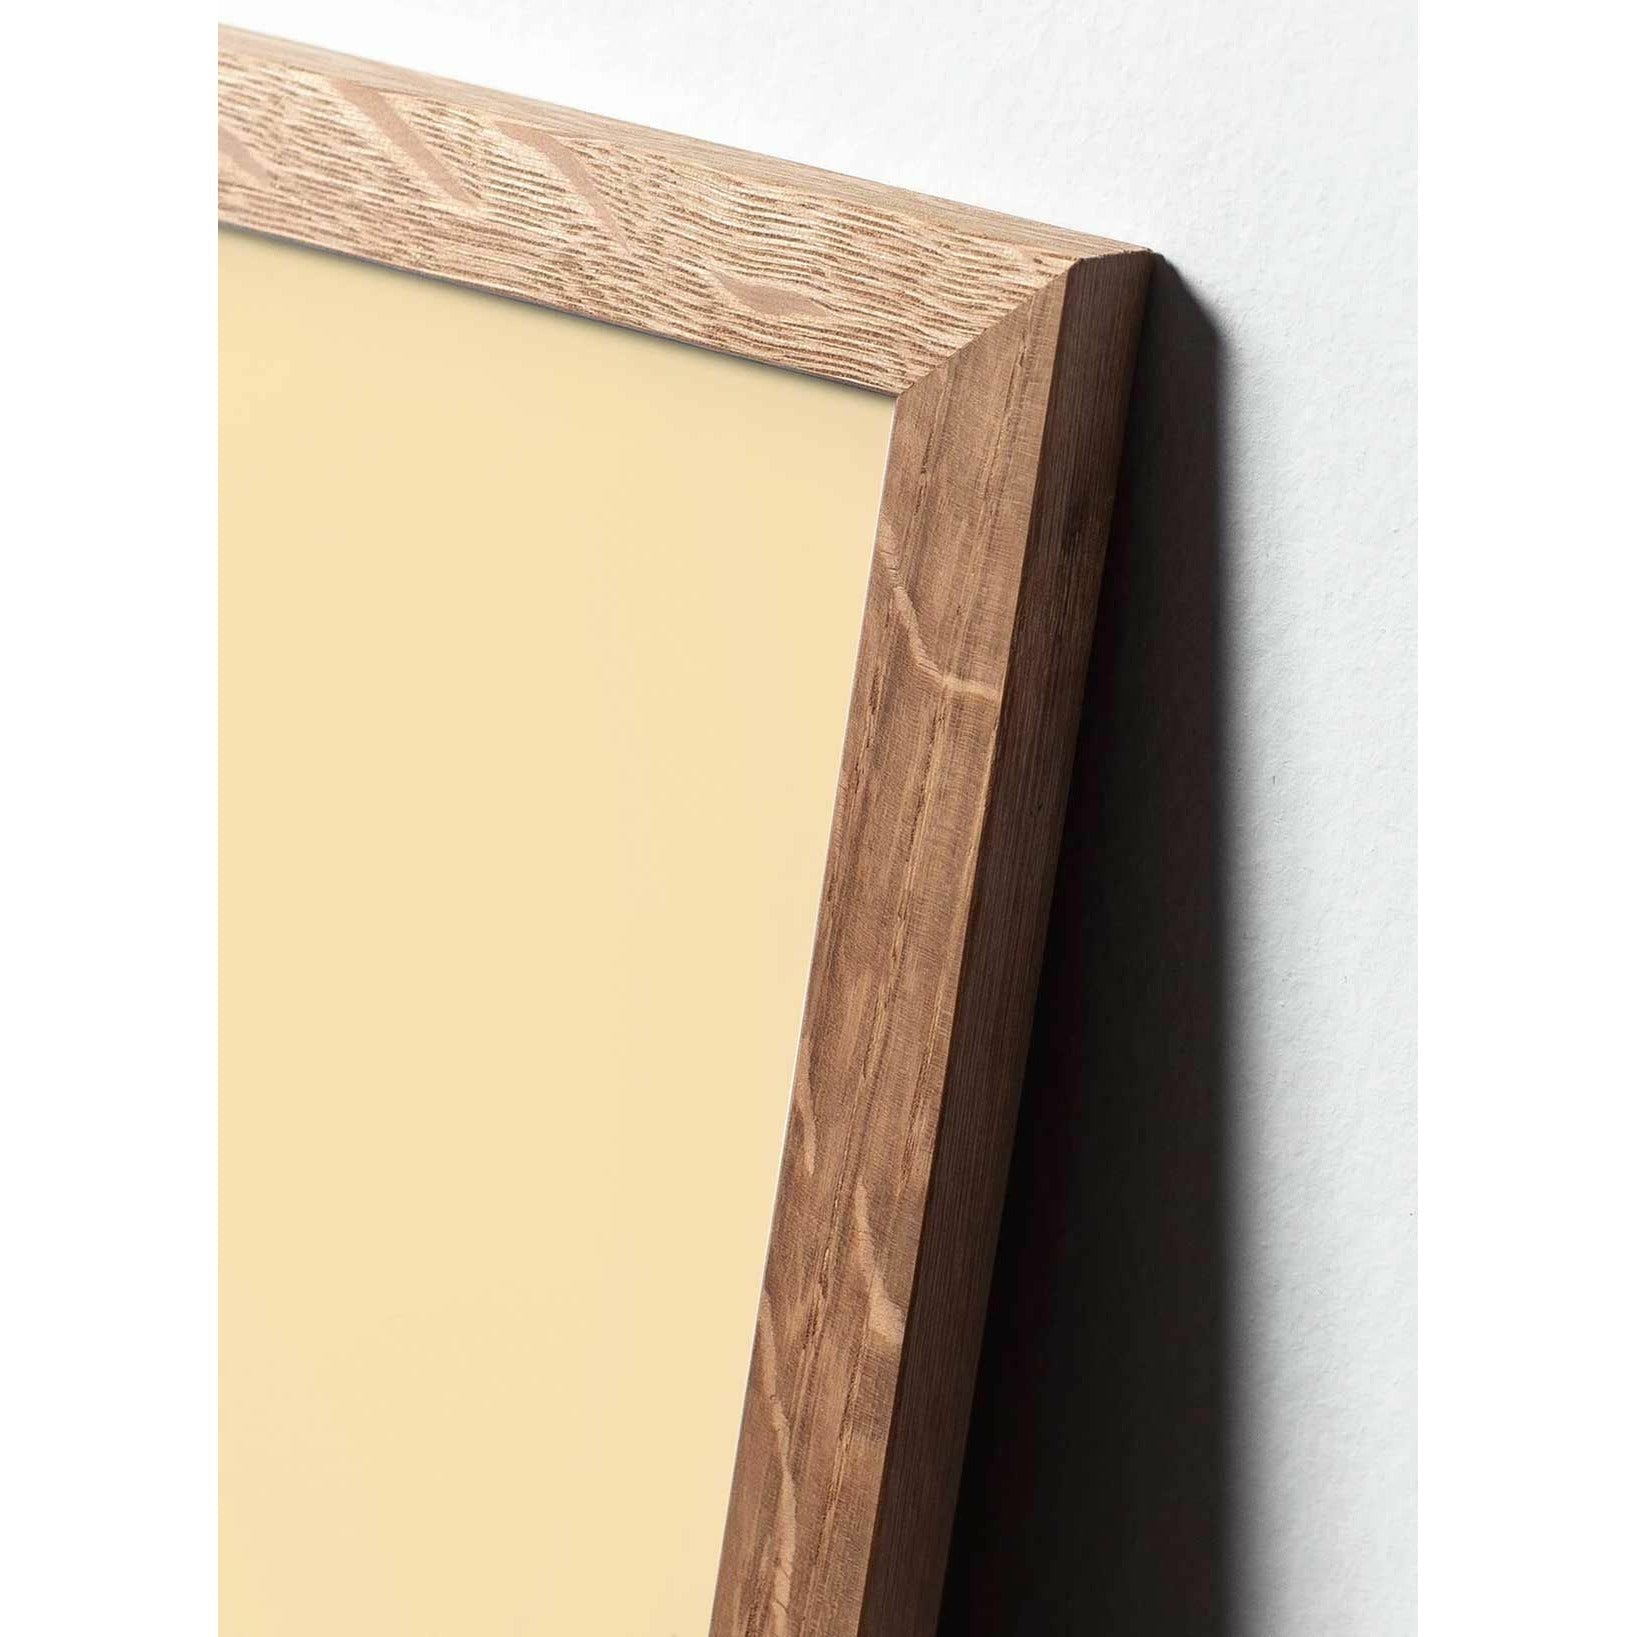 Brainchild Ant Design Icon Poster, Frame Made Of Light Wood 70 X100 Cm, Yellow